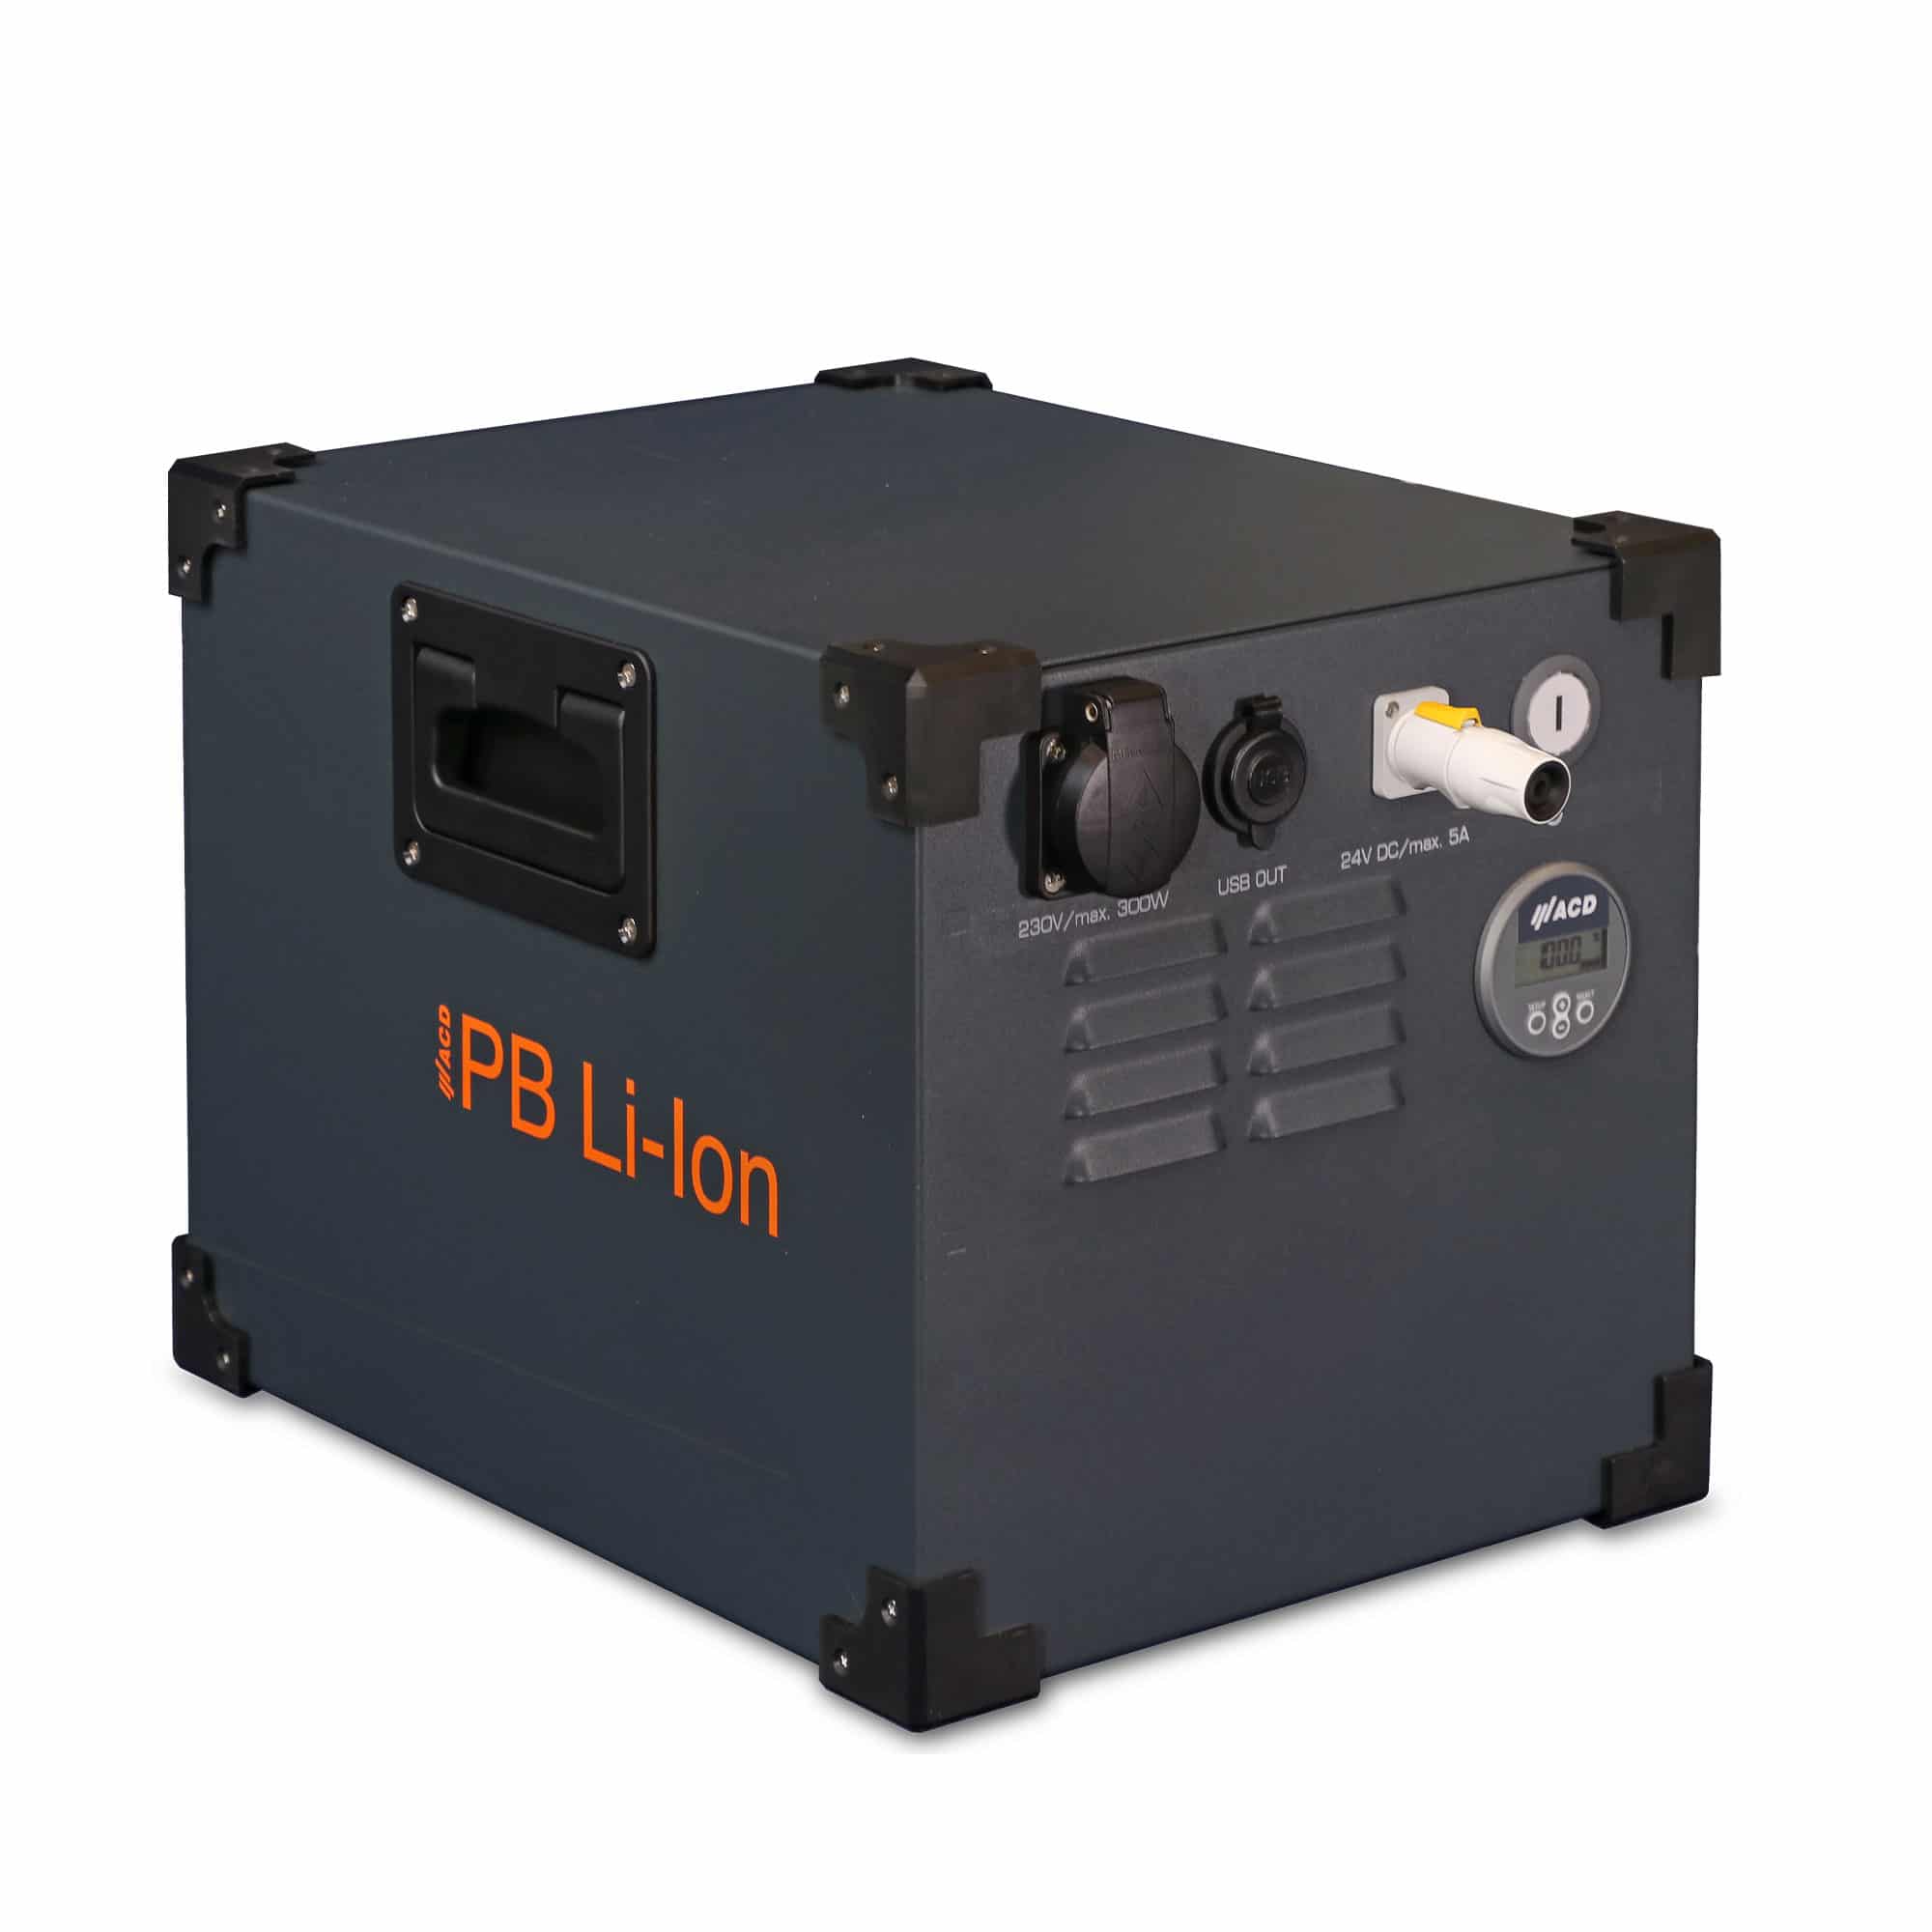 PowerBox PB300 Li-Ionen